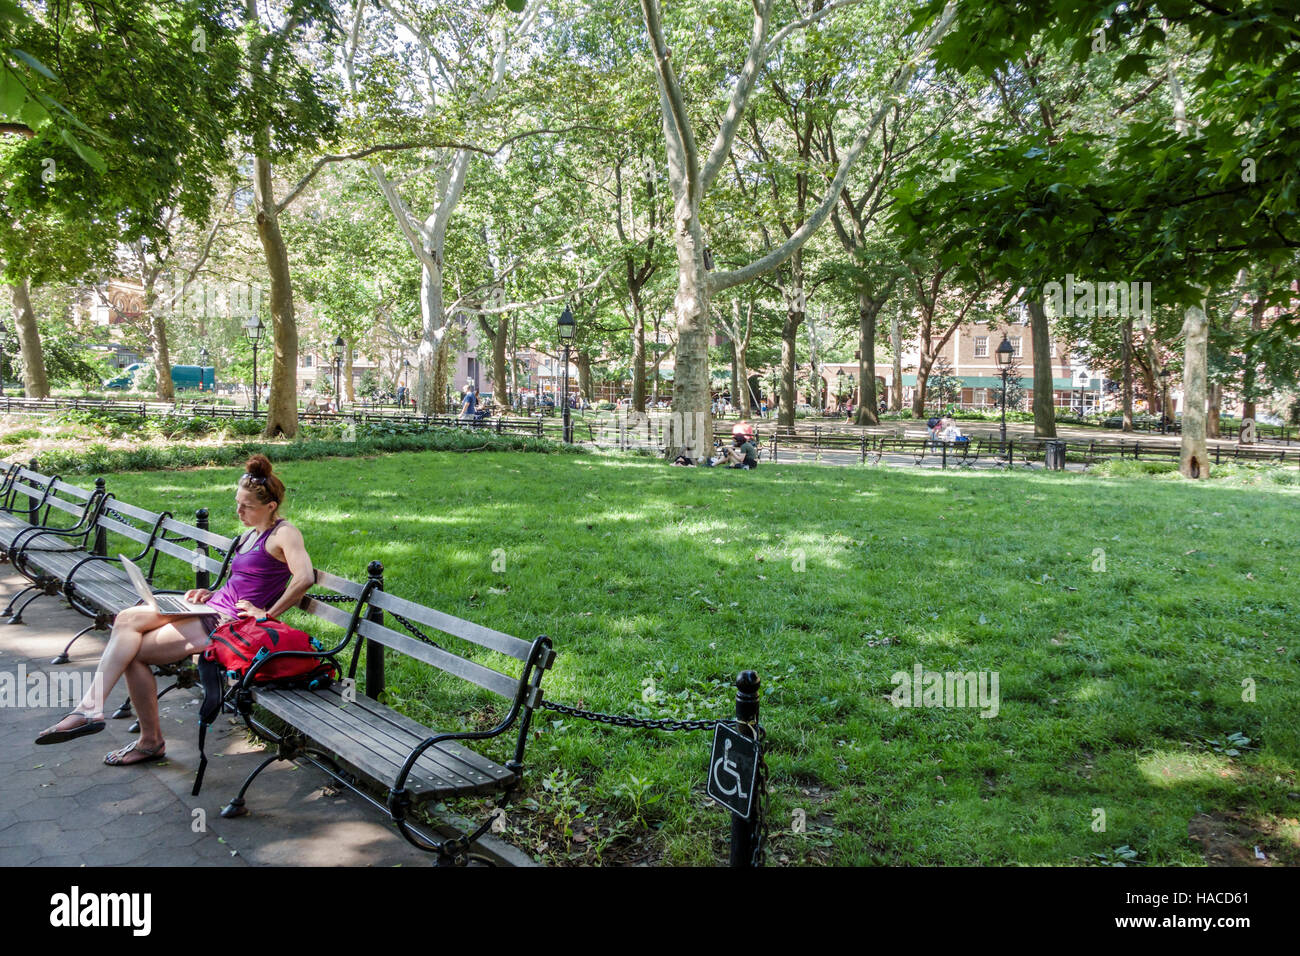 New York City,NY NYC Manhattan,Greenwich Village,Washington Square Park,public park,bench,adult adults,woman female women,laptop,sitting,lawn,trees,NY Stock Photo